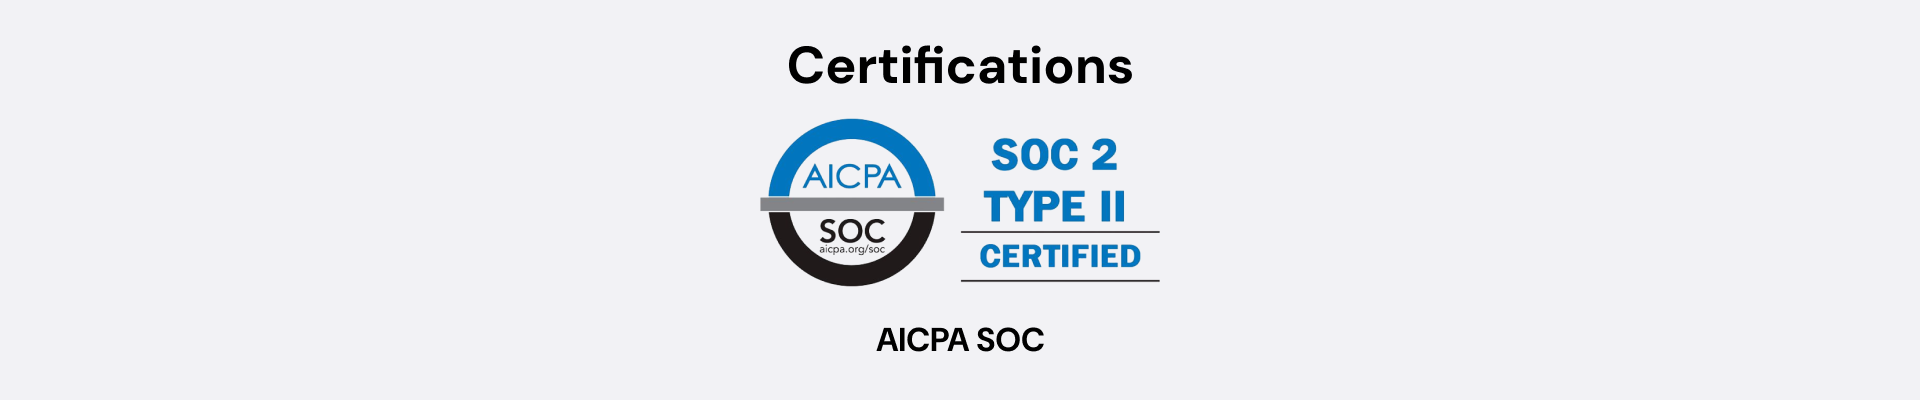 certifications@2x